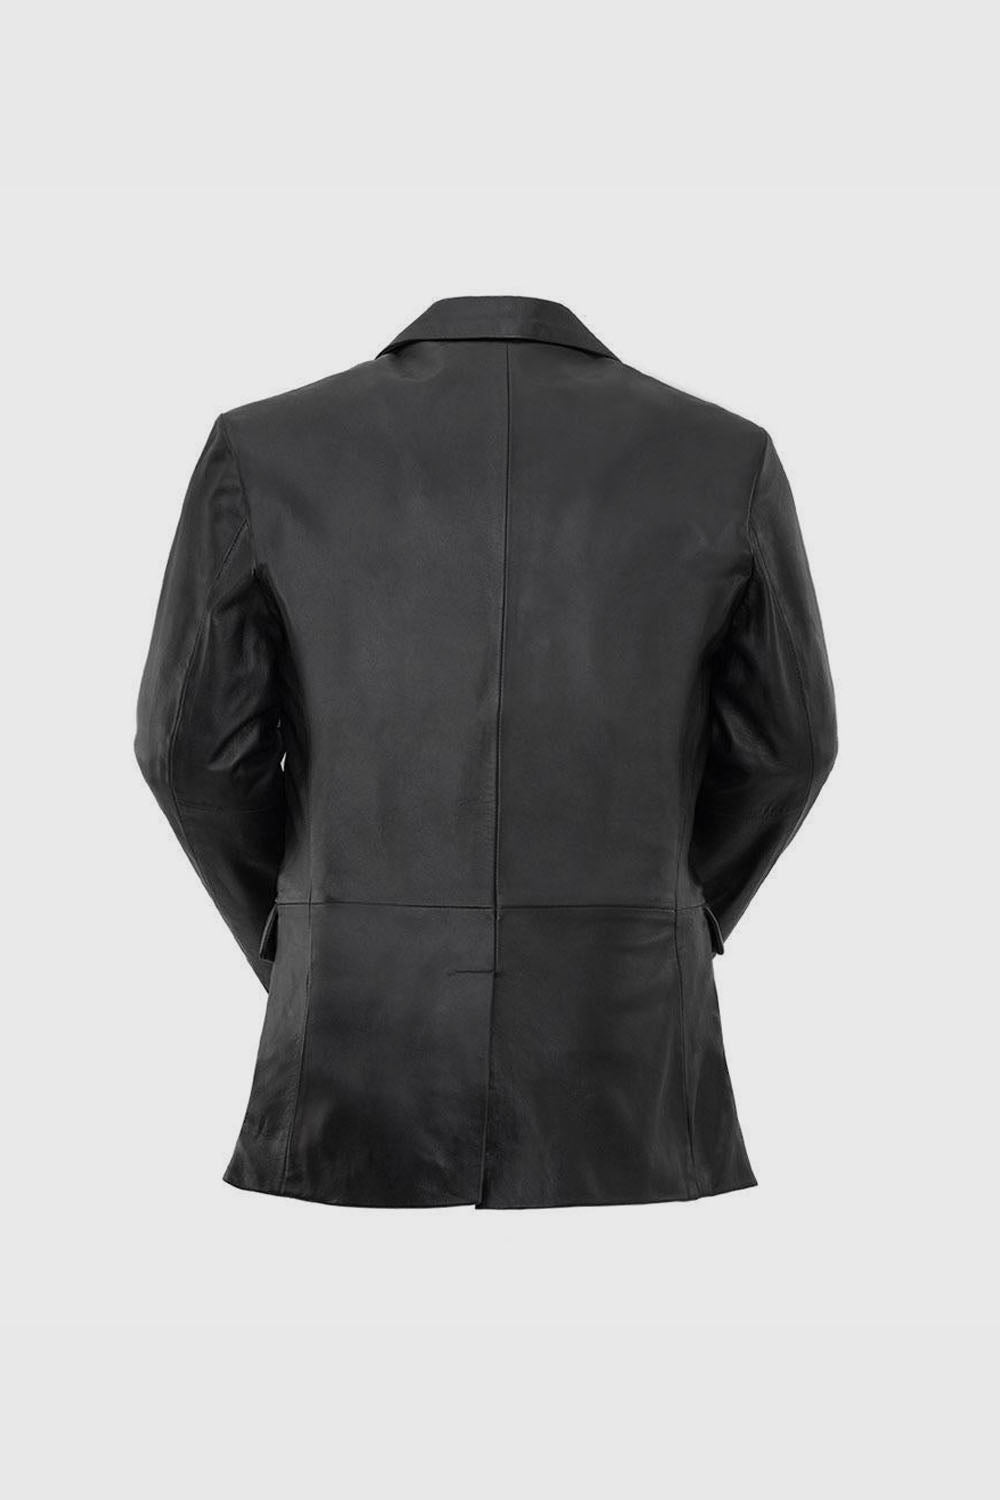 Esquire Mens Leather Jacket Black Men's Leather Jacket Whet Blu NYC   